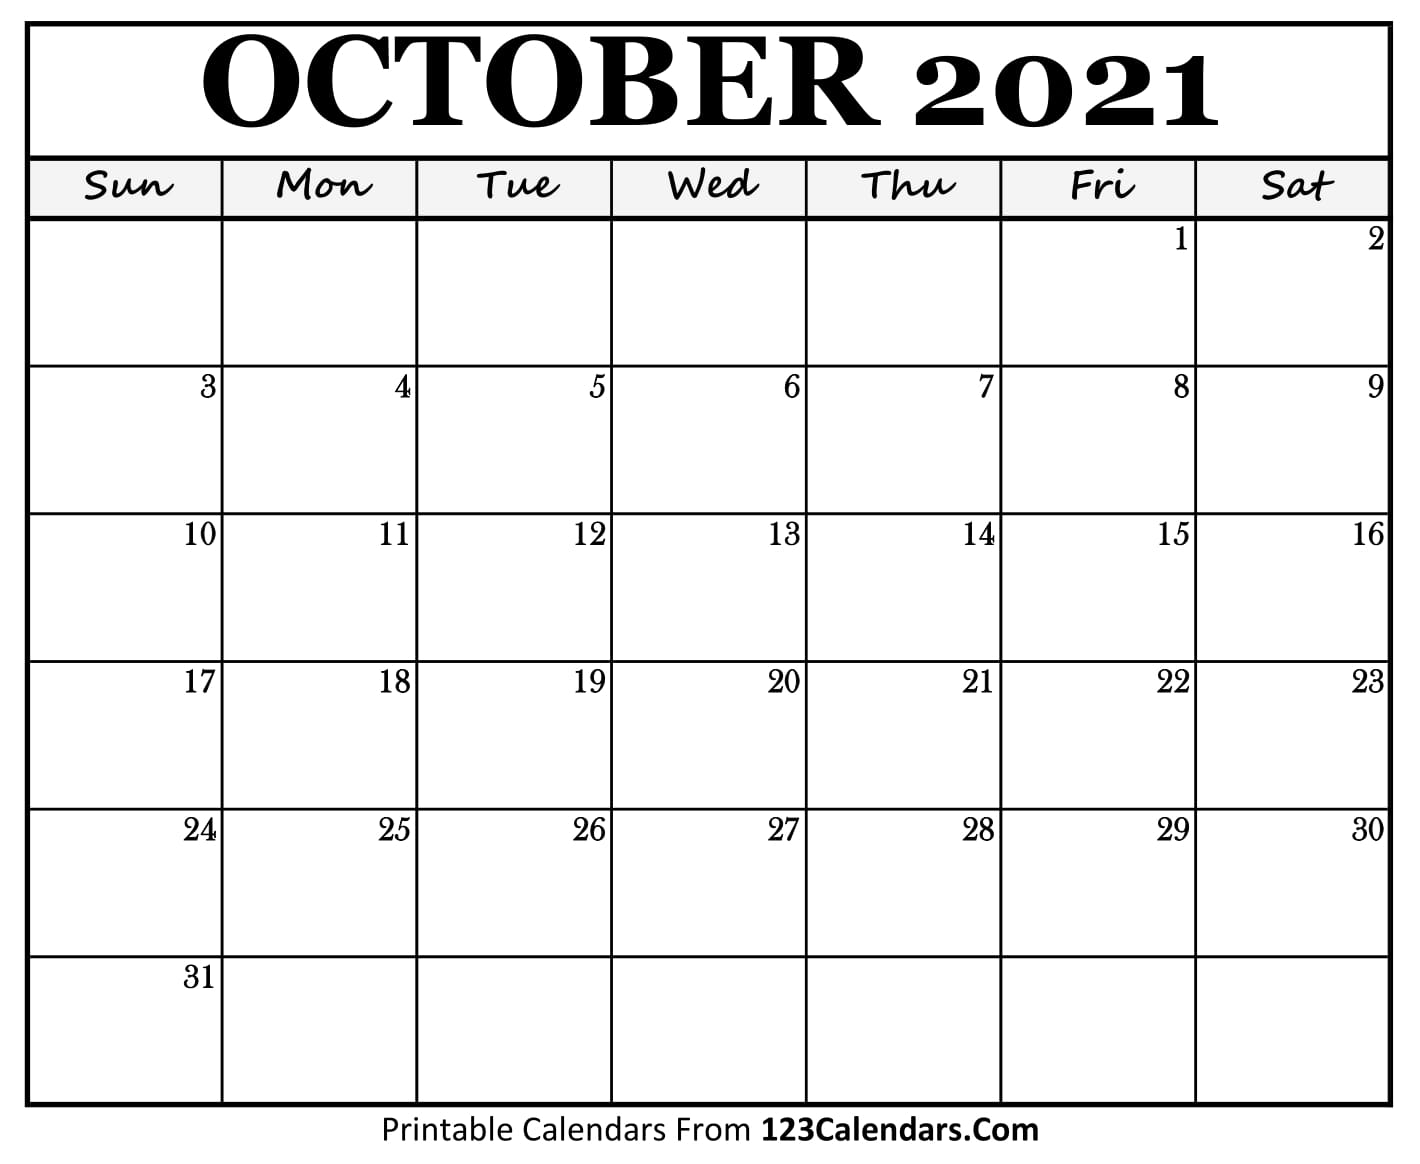 printable-october-2021-calendar-templates-123calendars